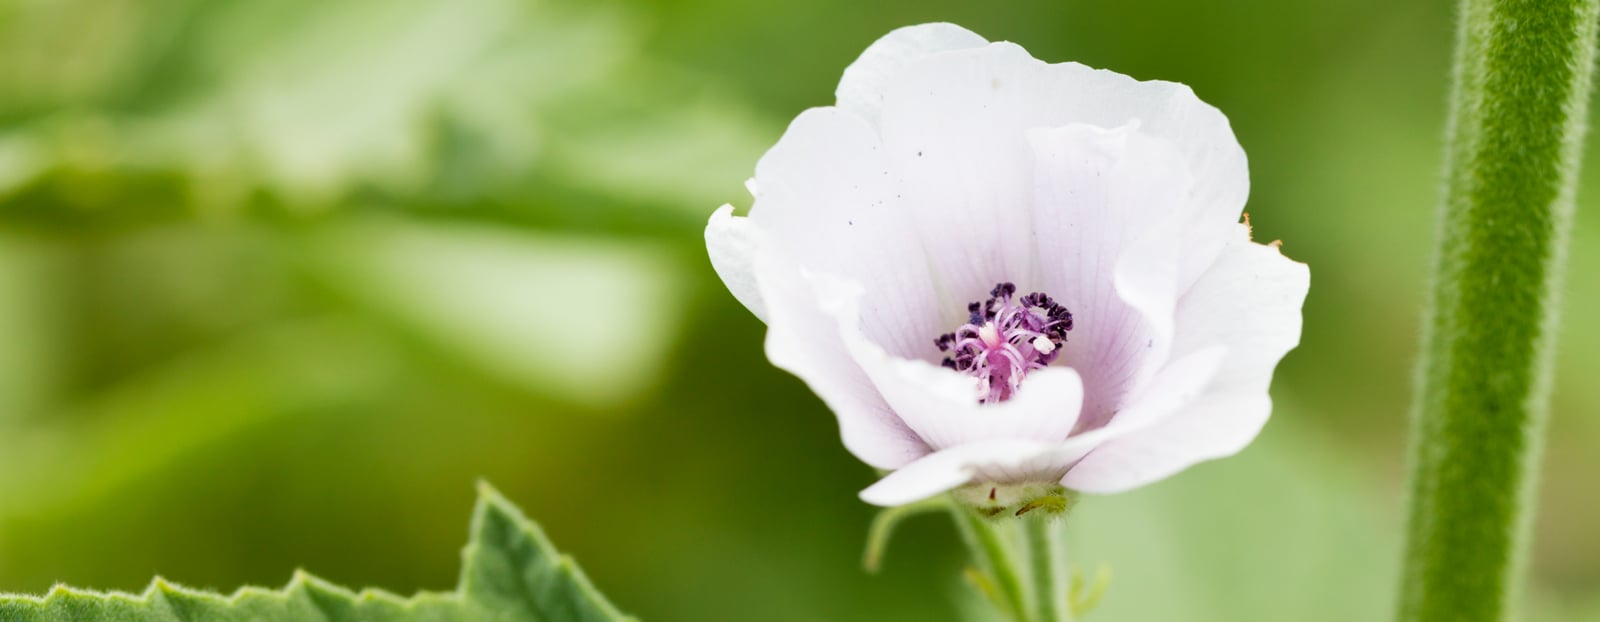 Marshmallow flower in its natural habitat